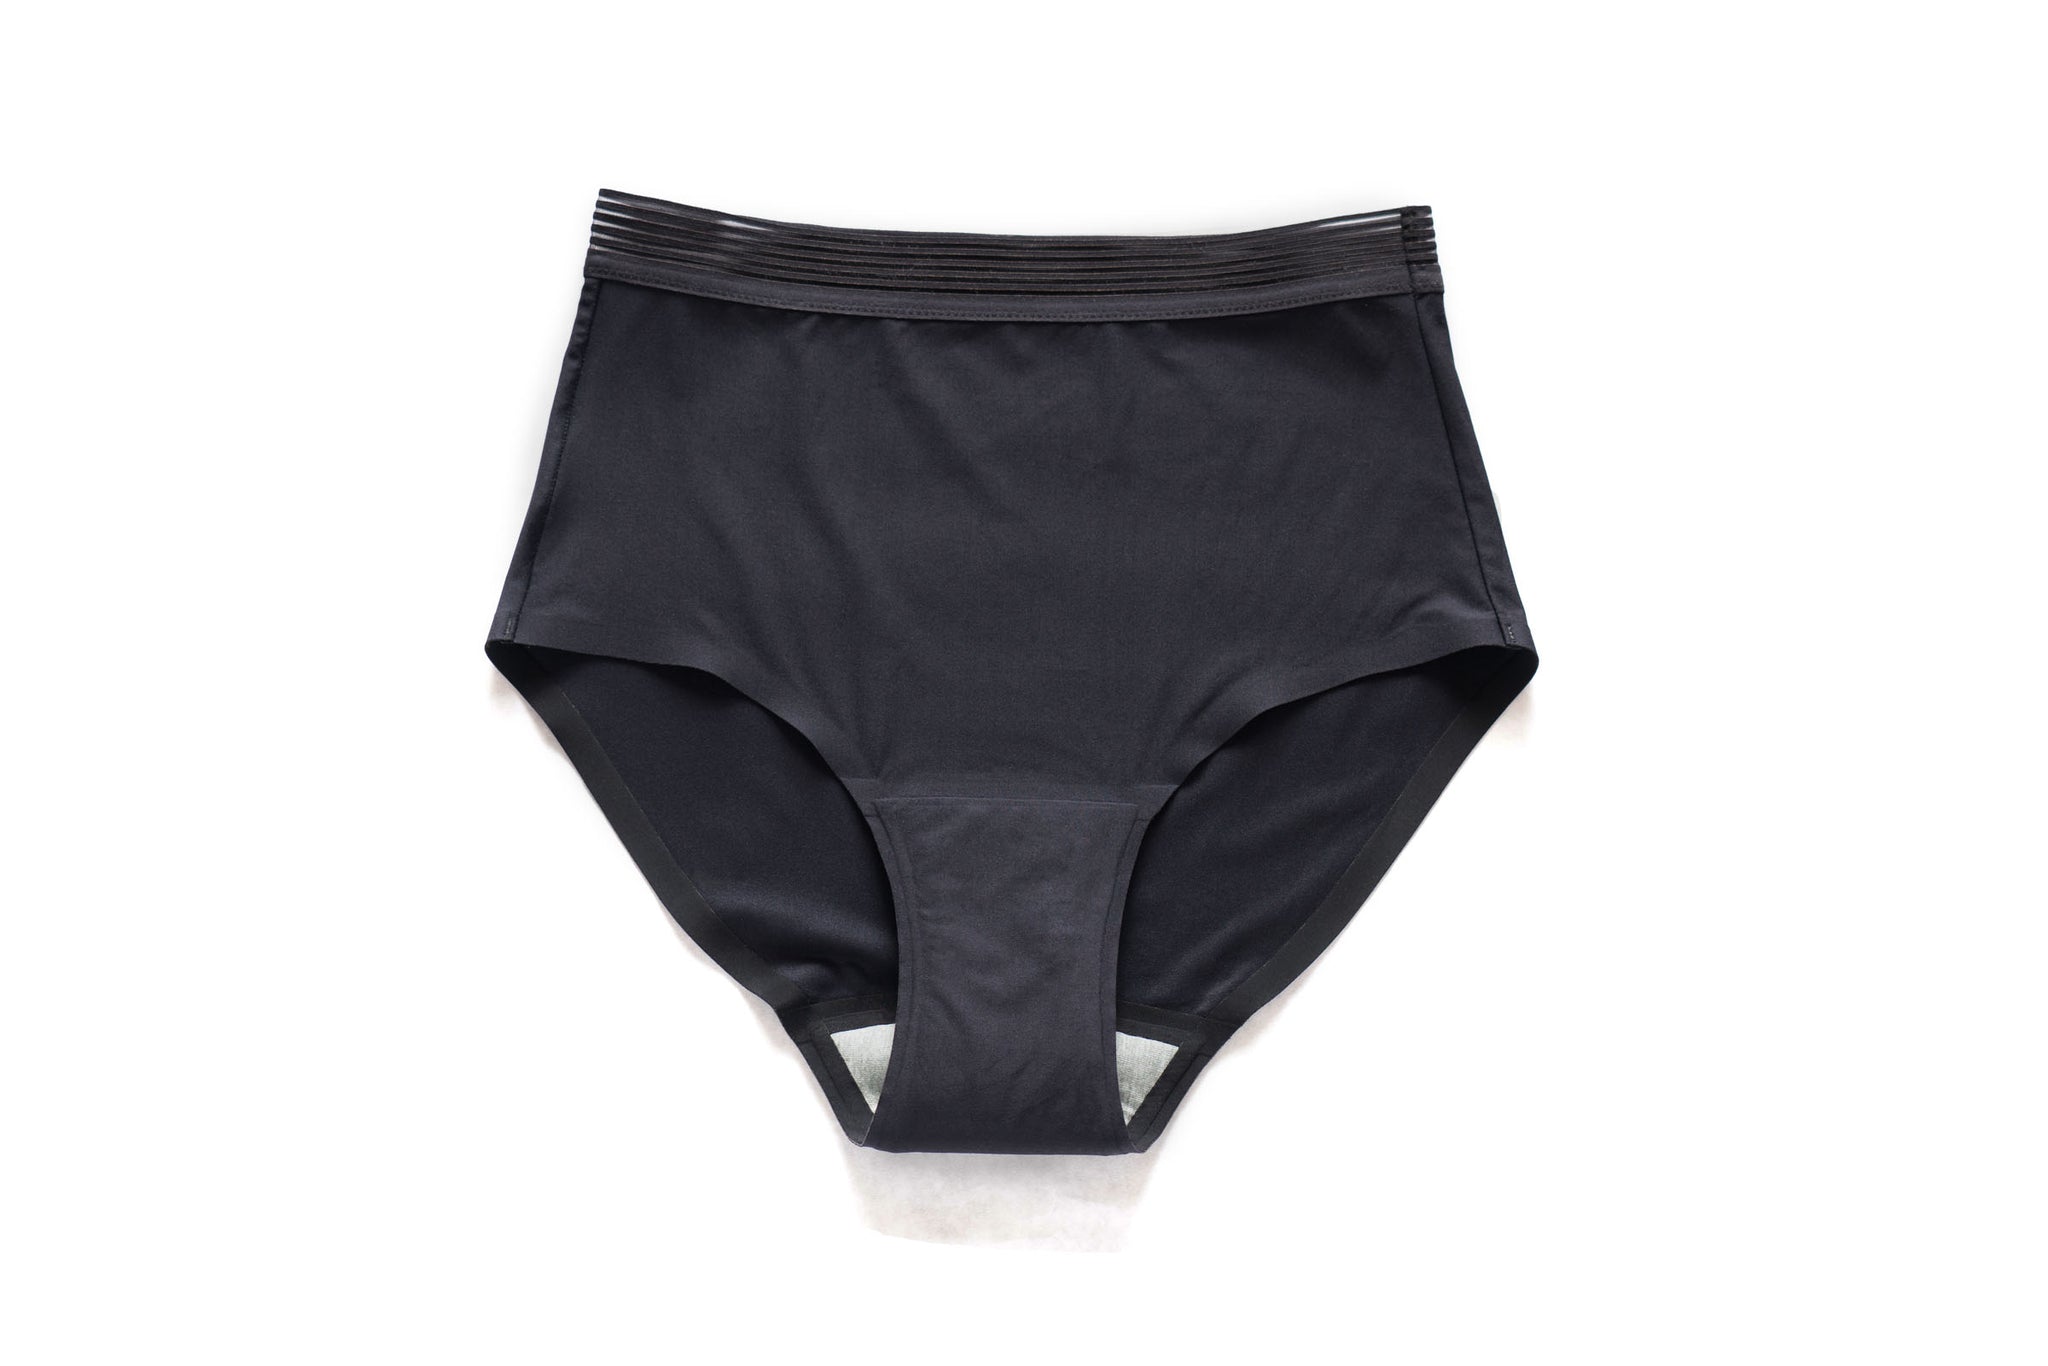 RanZZRan Period Underwear Heavy Flow Bamboo Rayon High Waist Menstrual  Panties Soft Leak Proof Absorbent Underwear : : Clothing, Shoes 